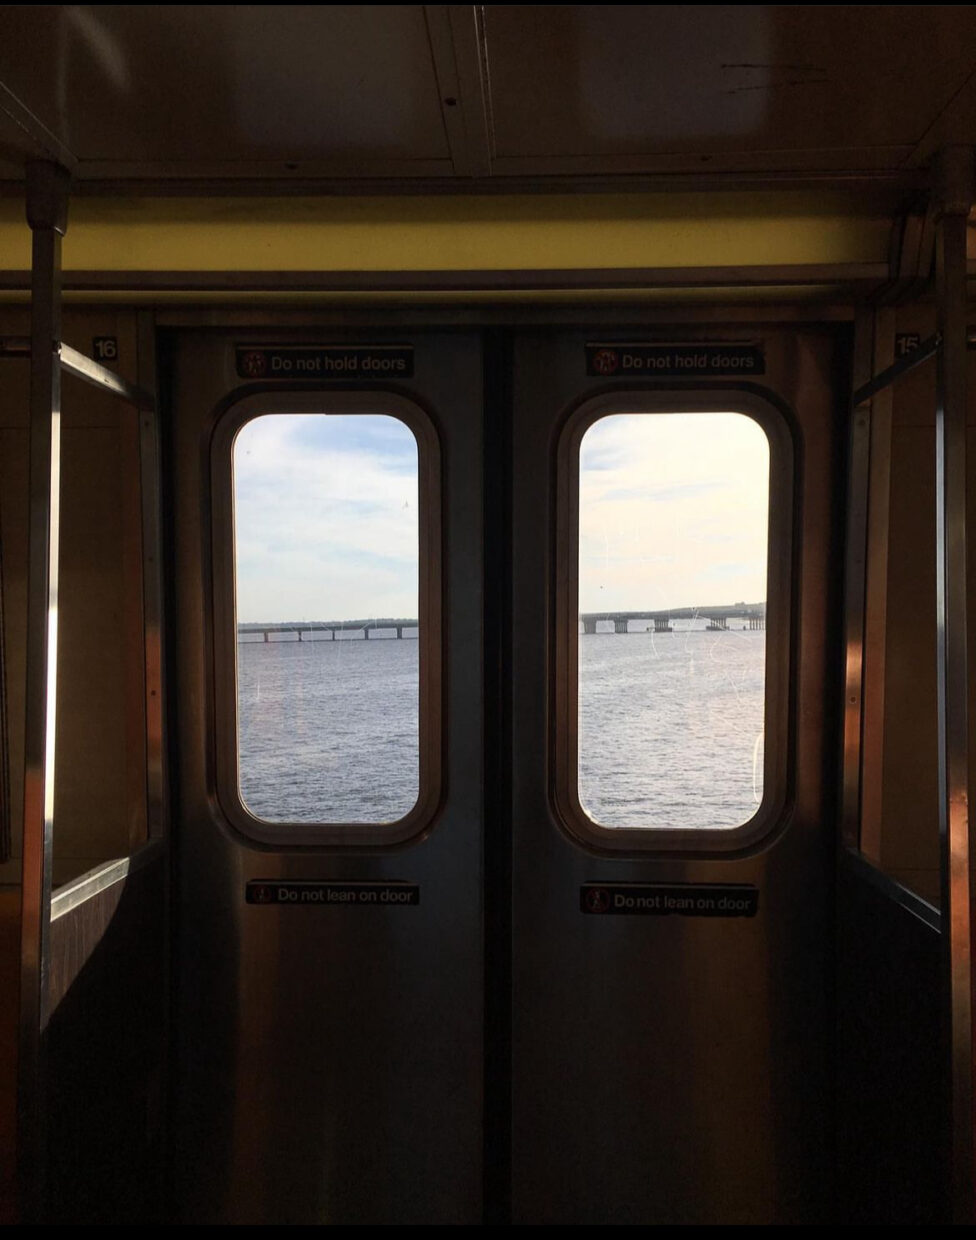 [Two subway doors overlook a bridge above a body of water during golden hour.]